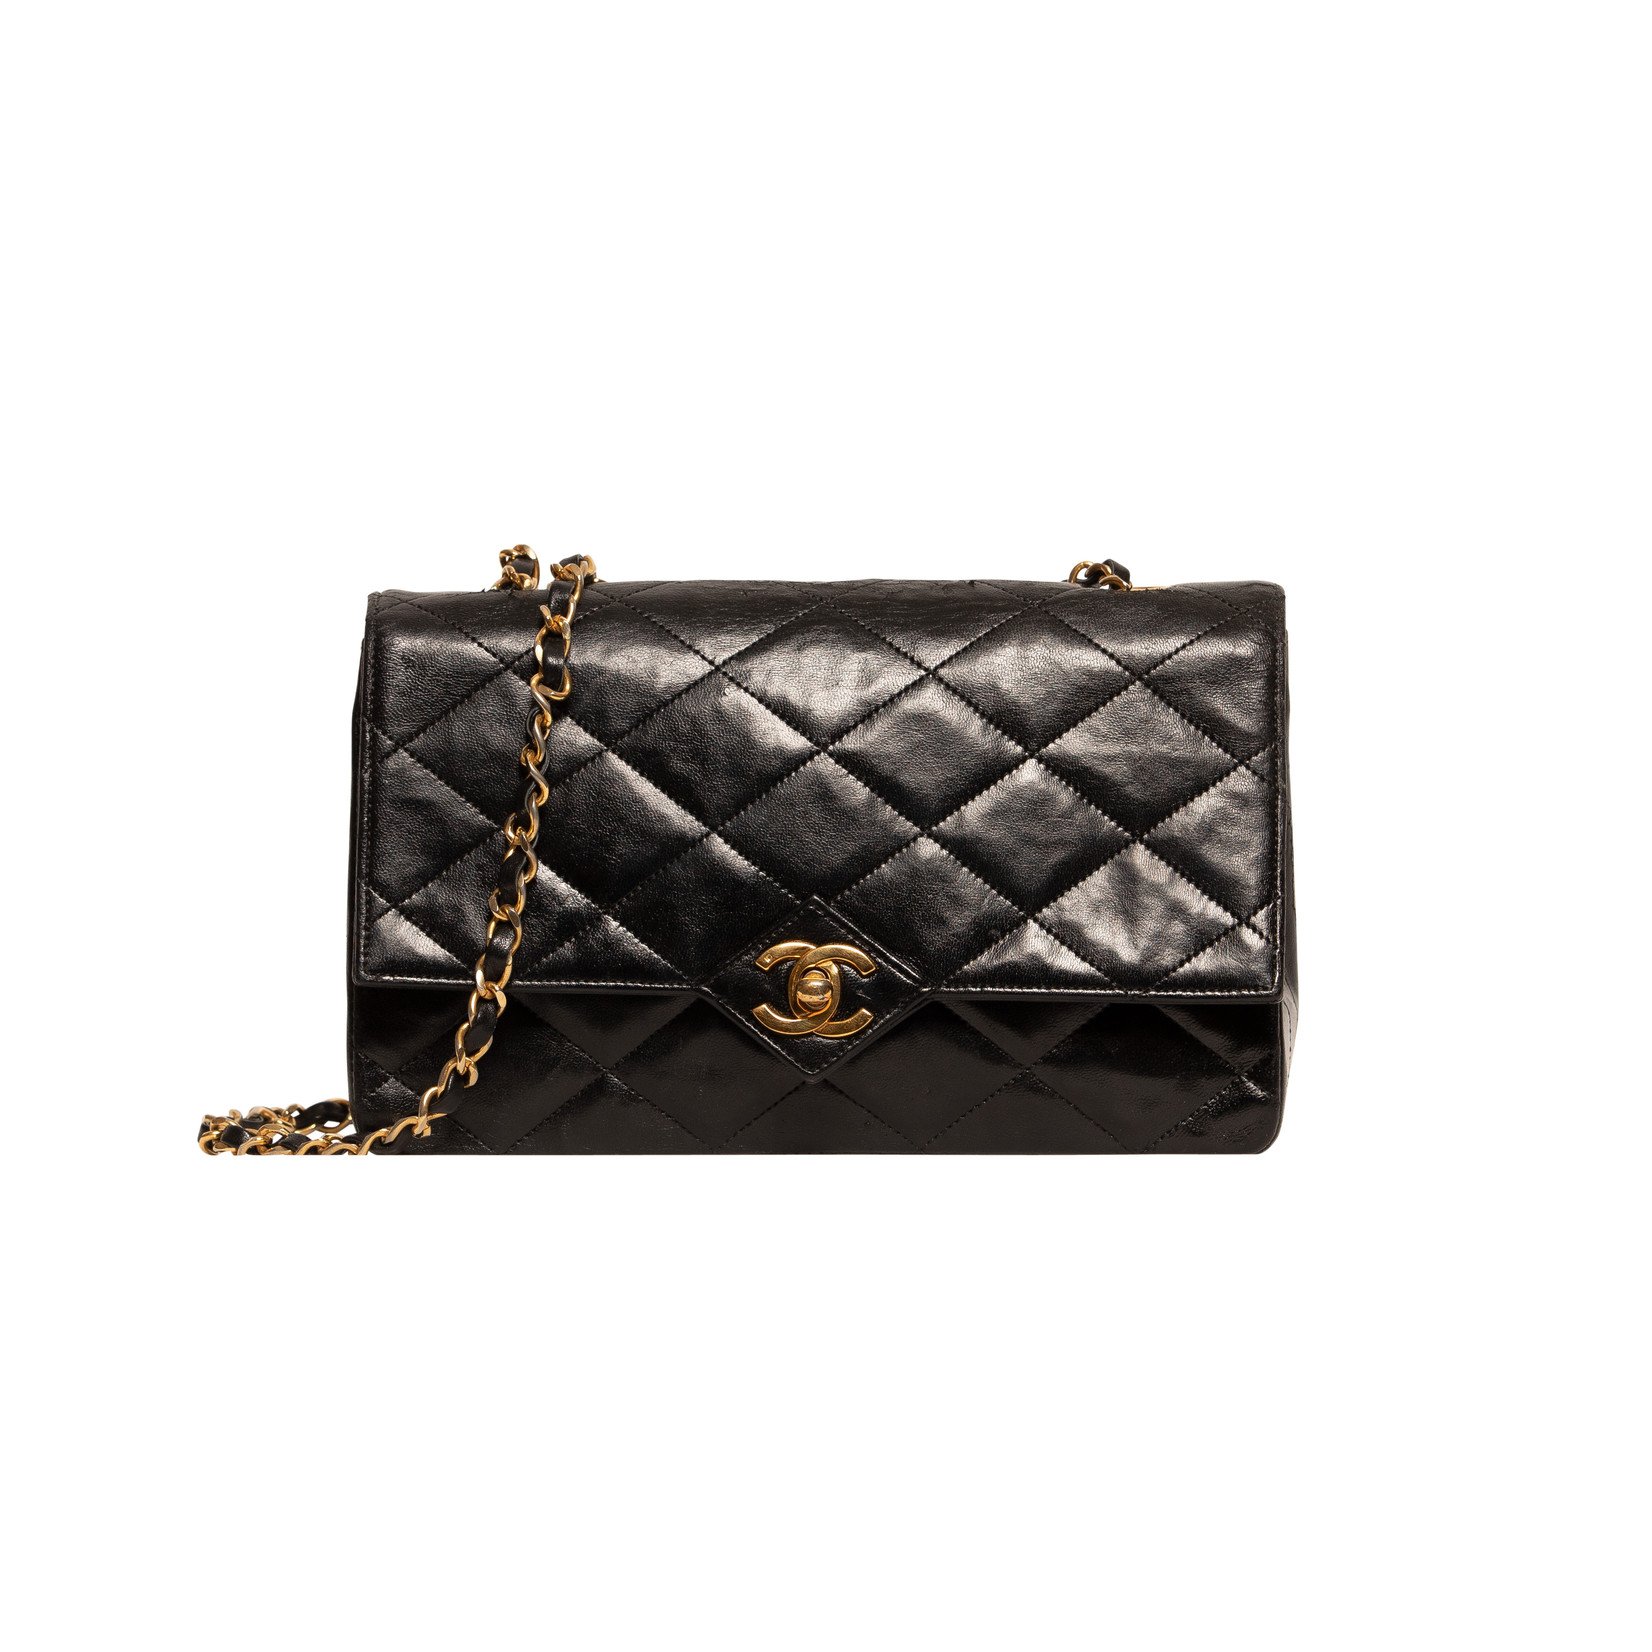 Black Leather Chanel Flap Bag - Wyld Blue